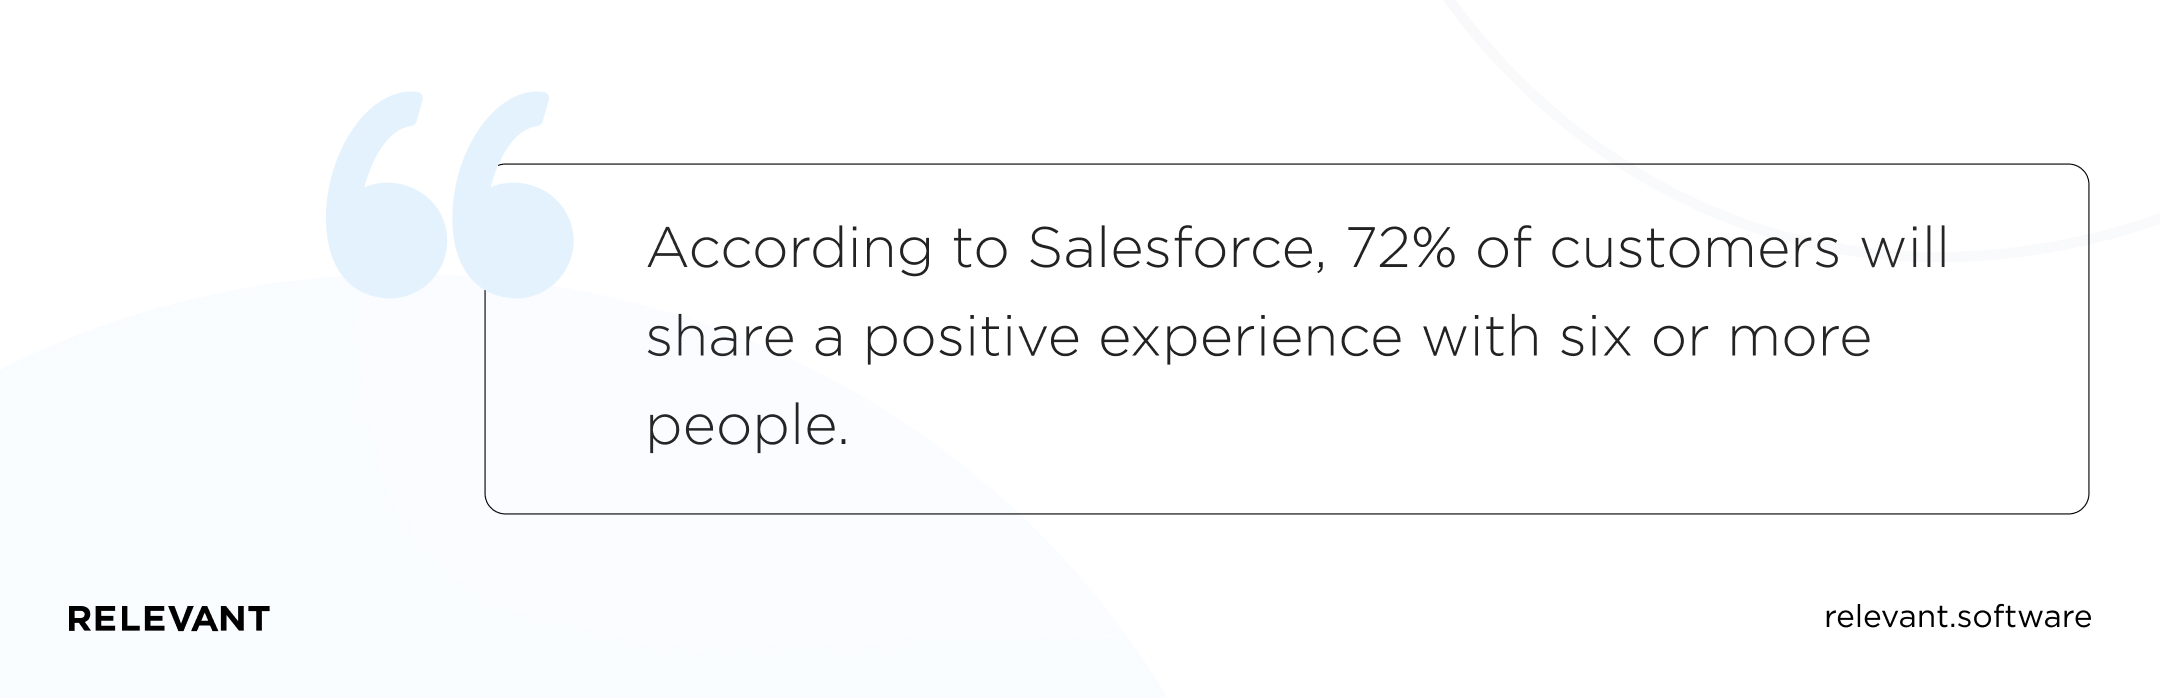 salesforce fact